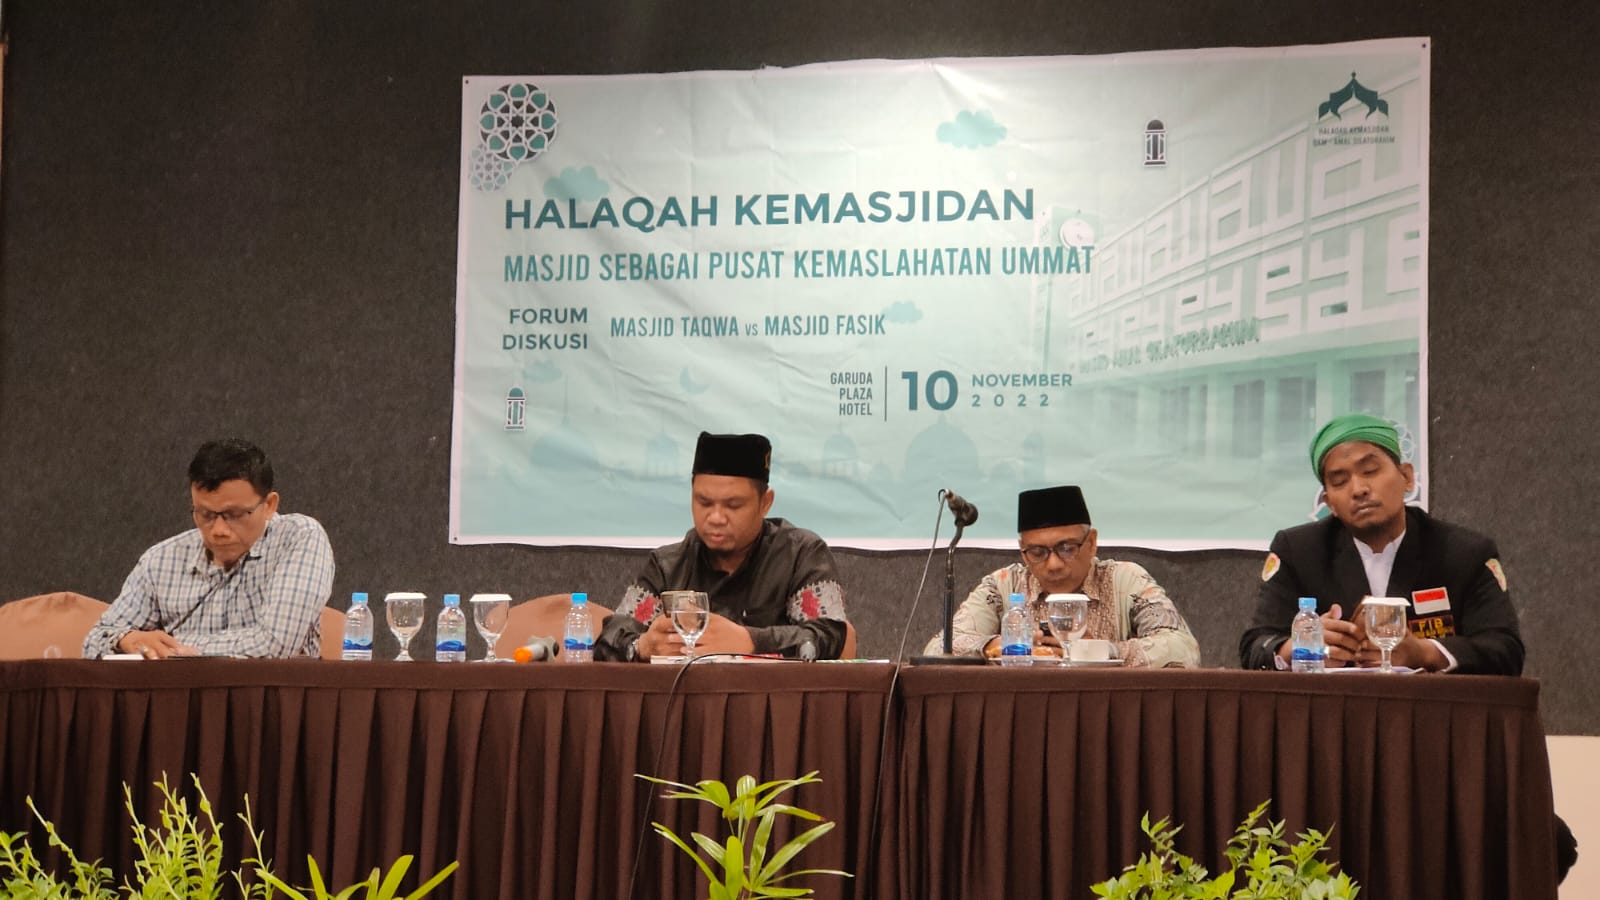 BKM Amal Silaturahmi Medan Gelar Halaqah Kemasjidan "Masjid Pusat Kemaslahatan Ummat"